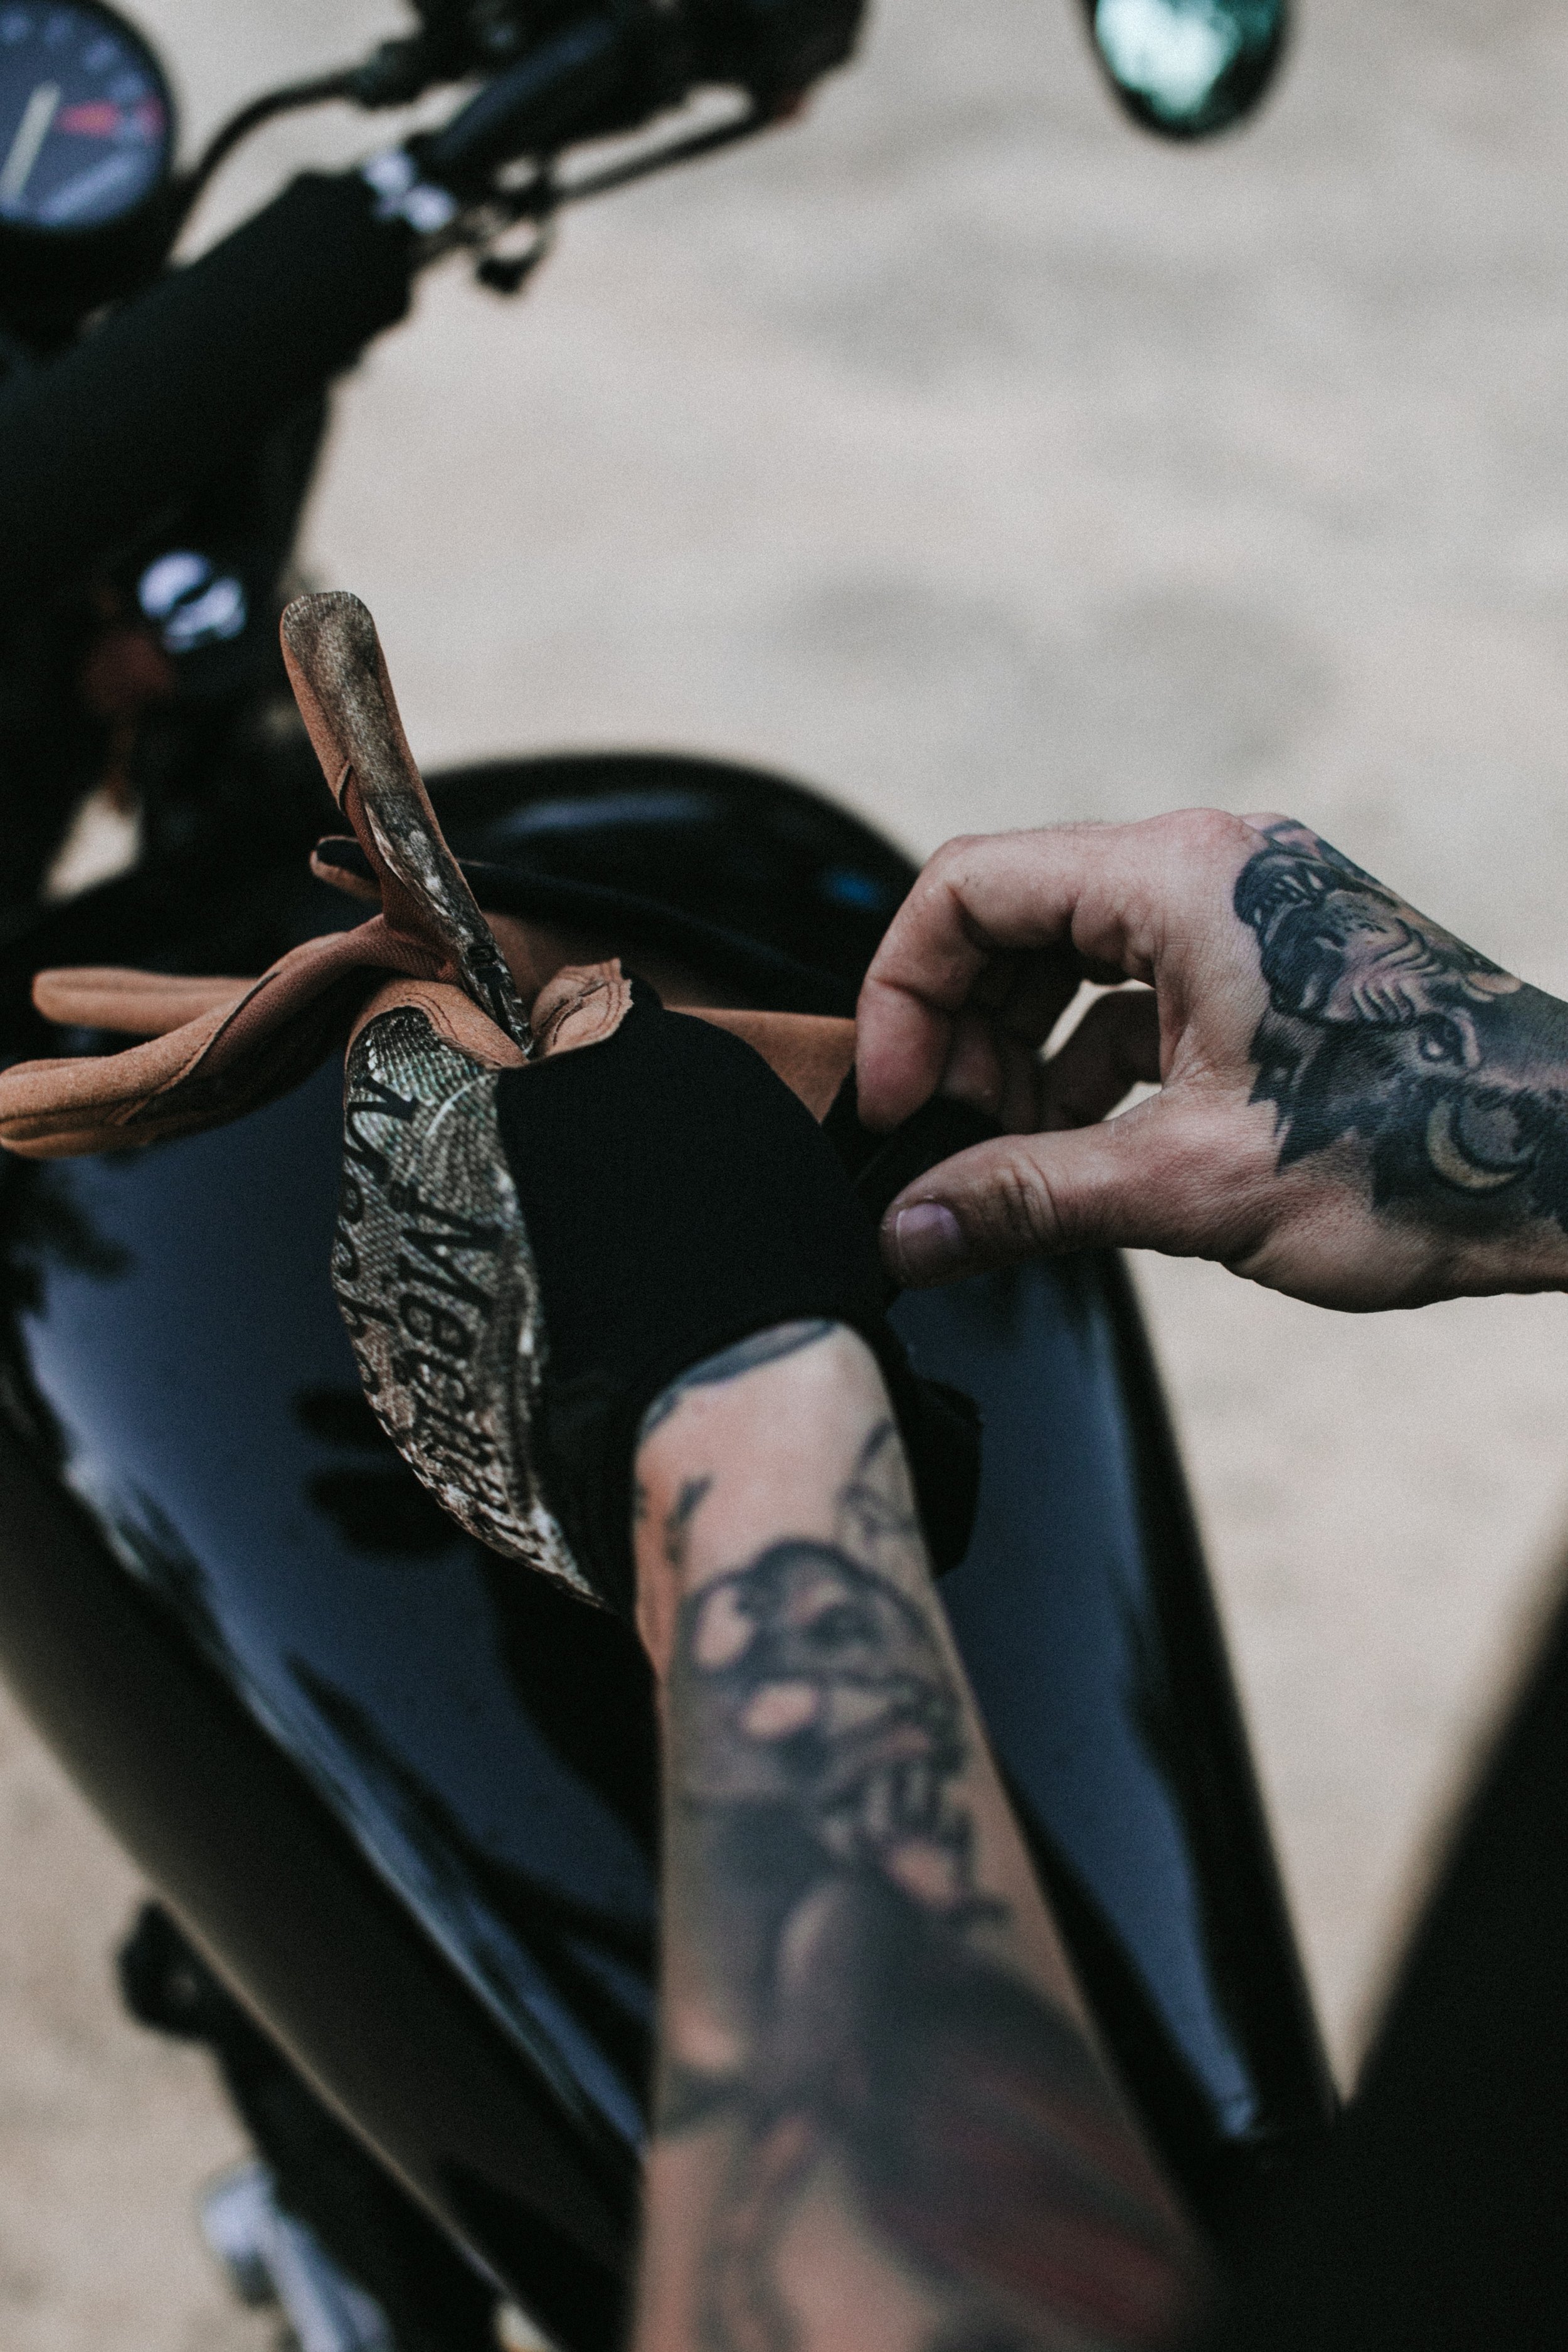 14 Awesome Black Rose Tattoos Worth Seeing